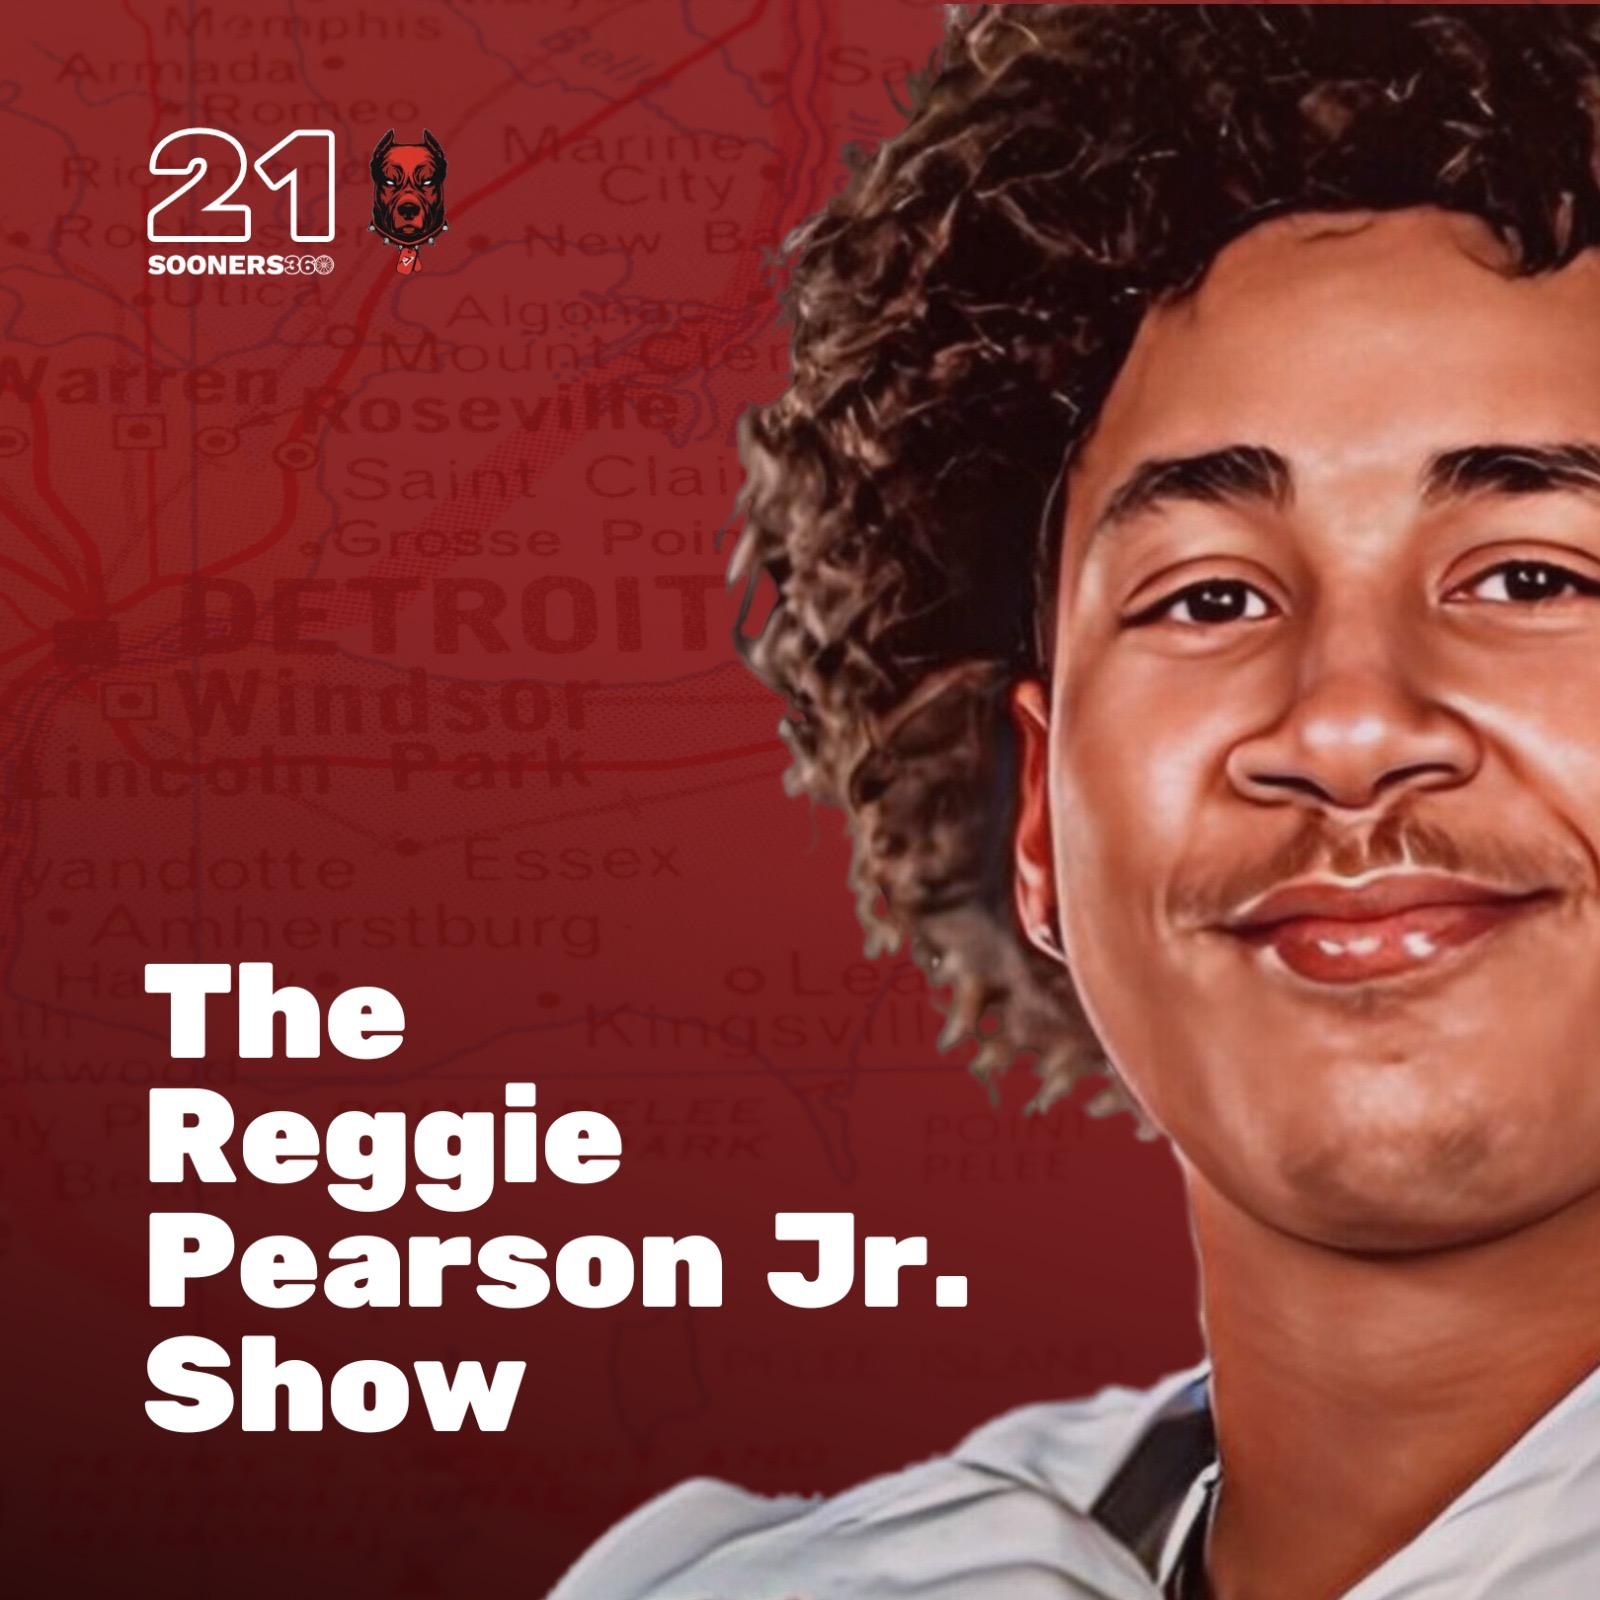 The Reggie Pearson Jr. Show